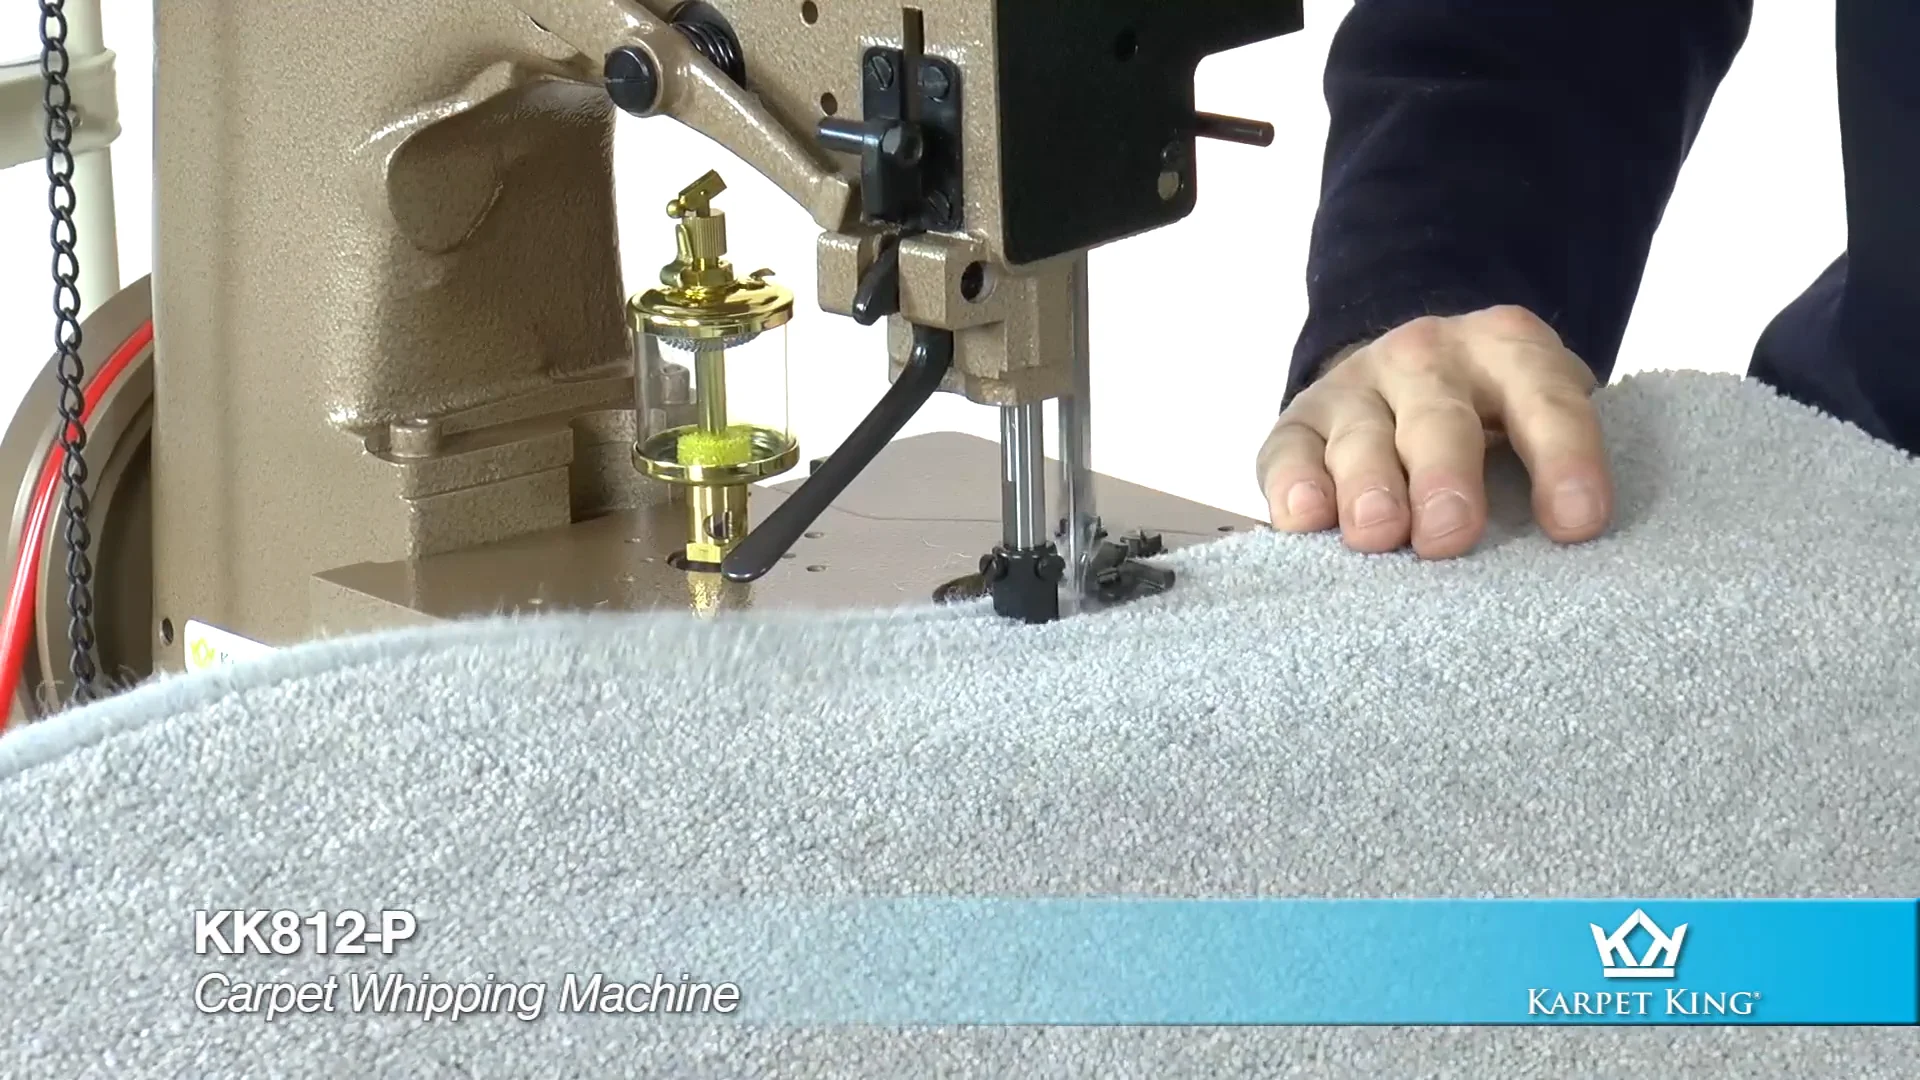 KK812-P - Carpet Whipping Machine on Vimeo